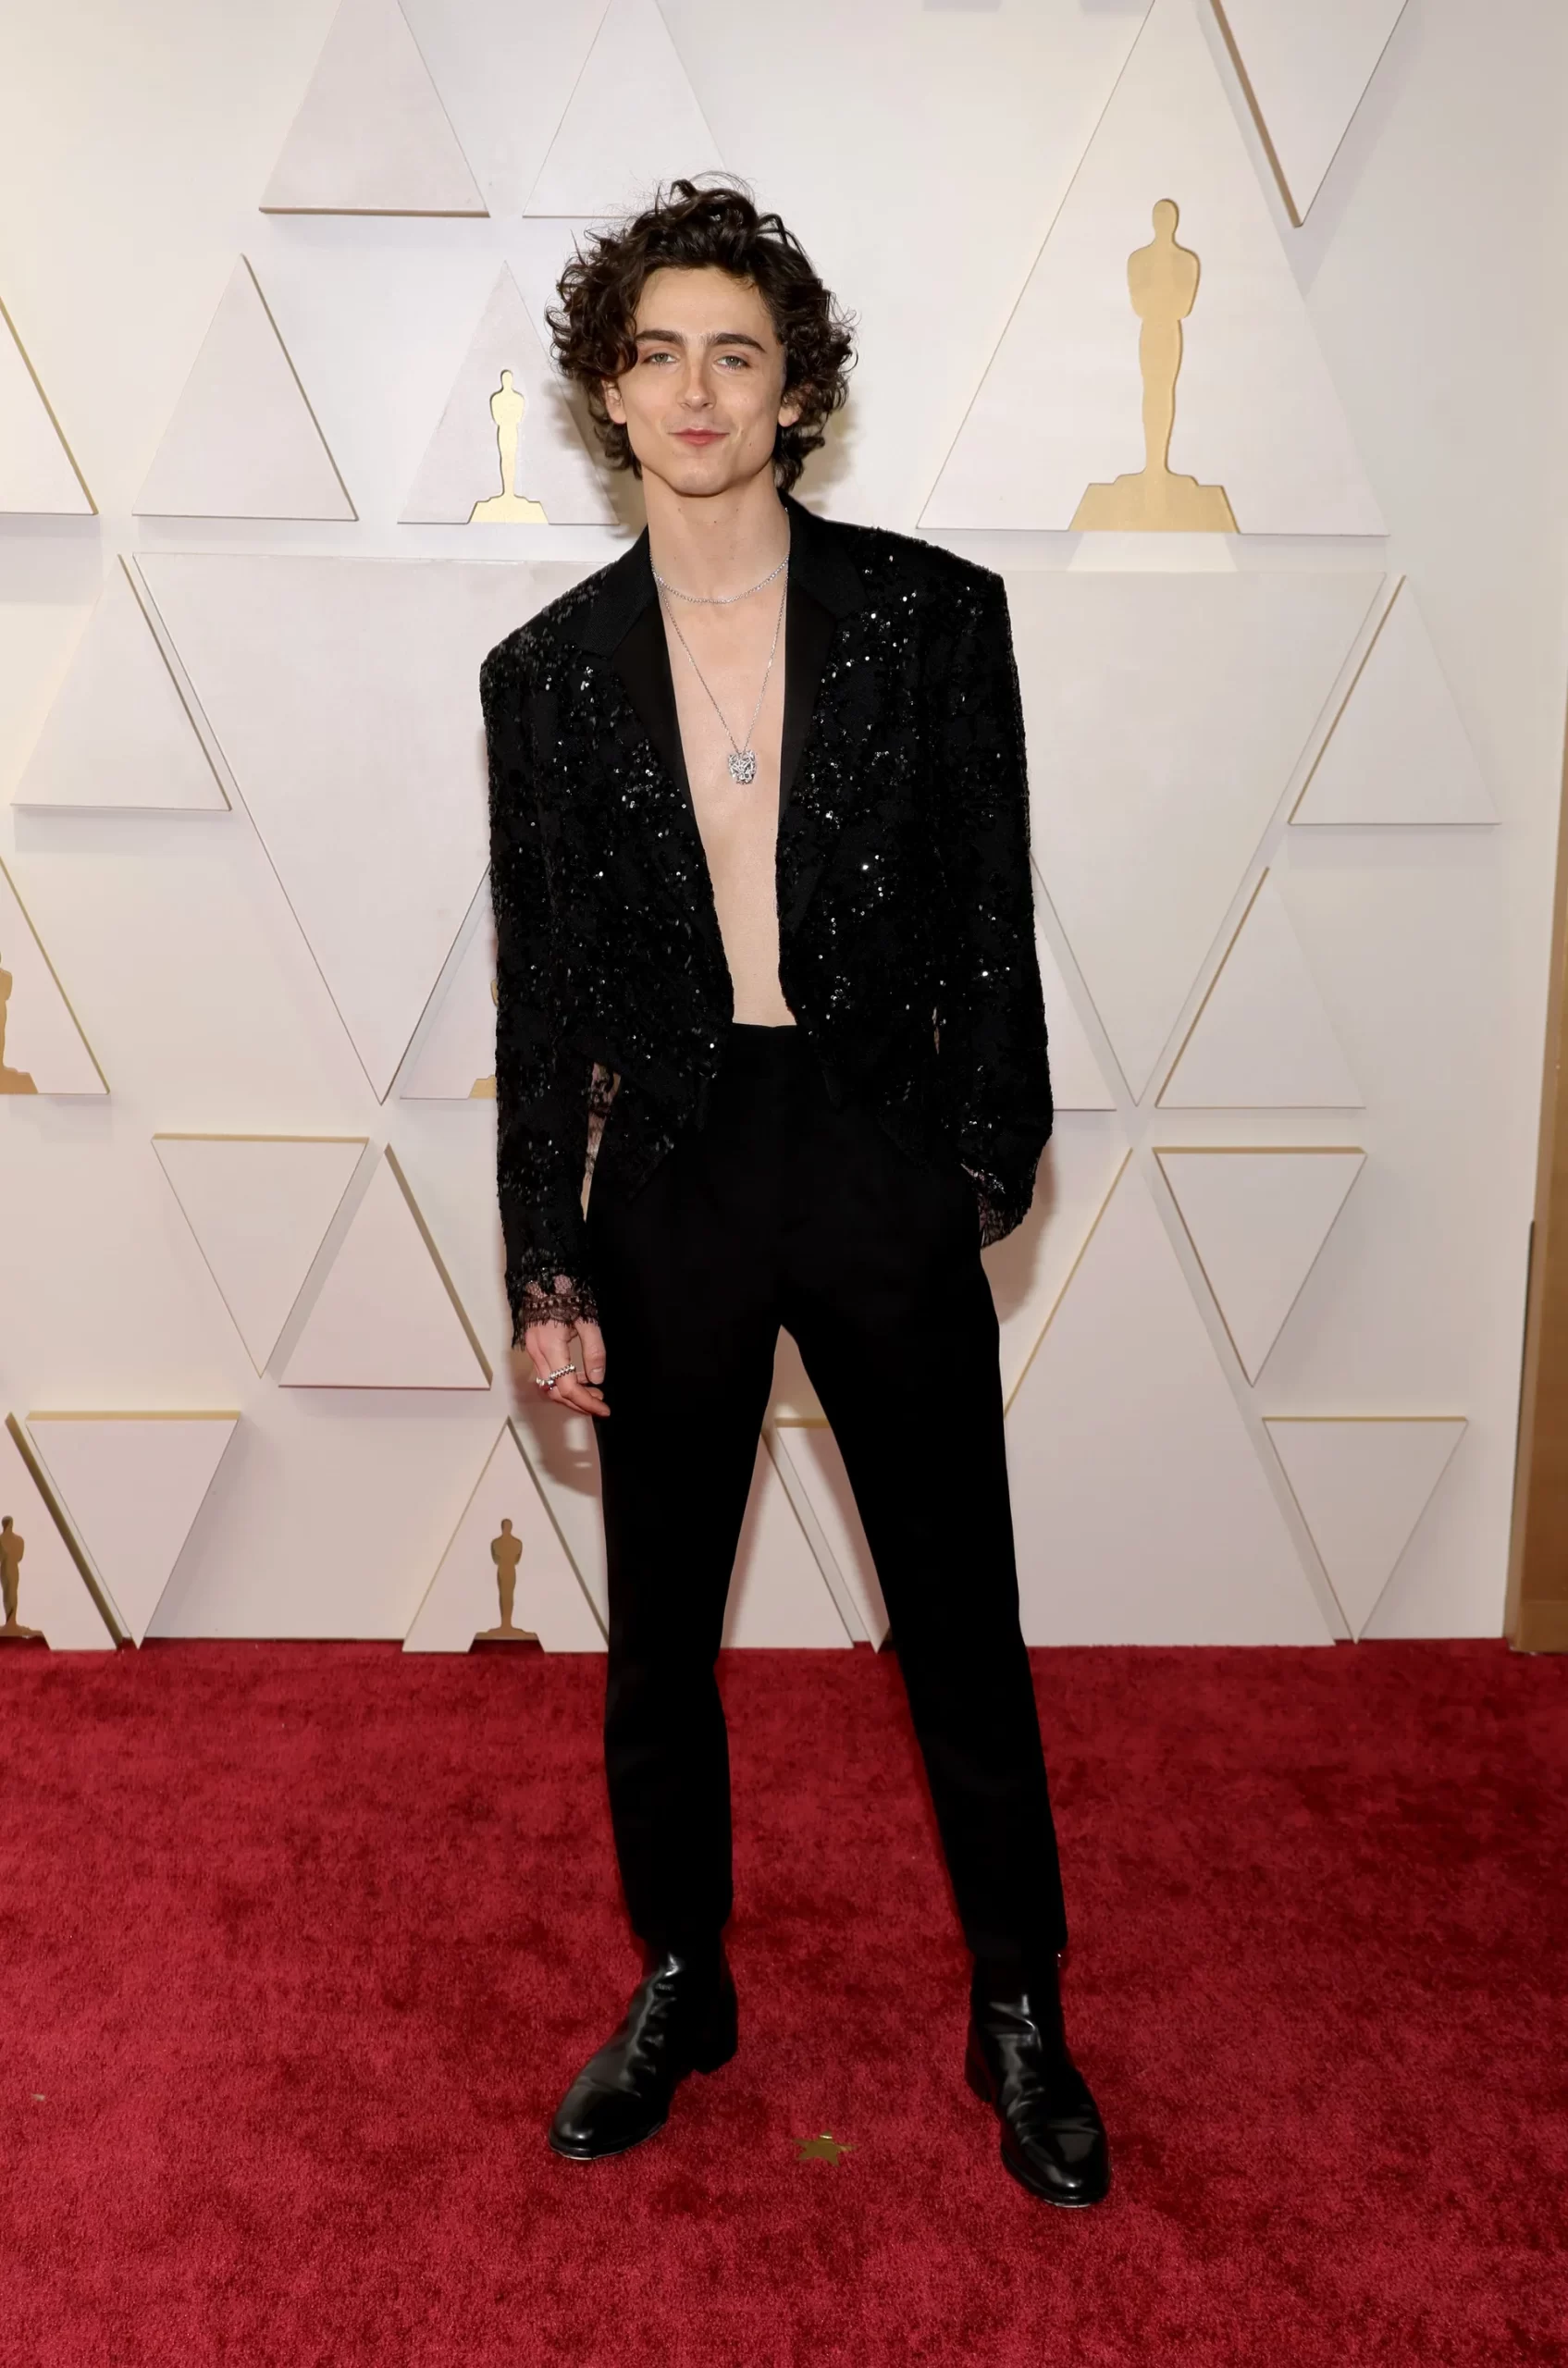 thời trang nam Oscars 2022